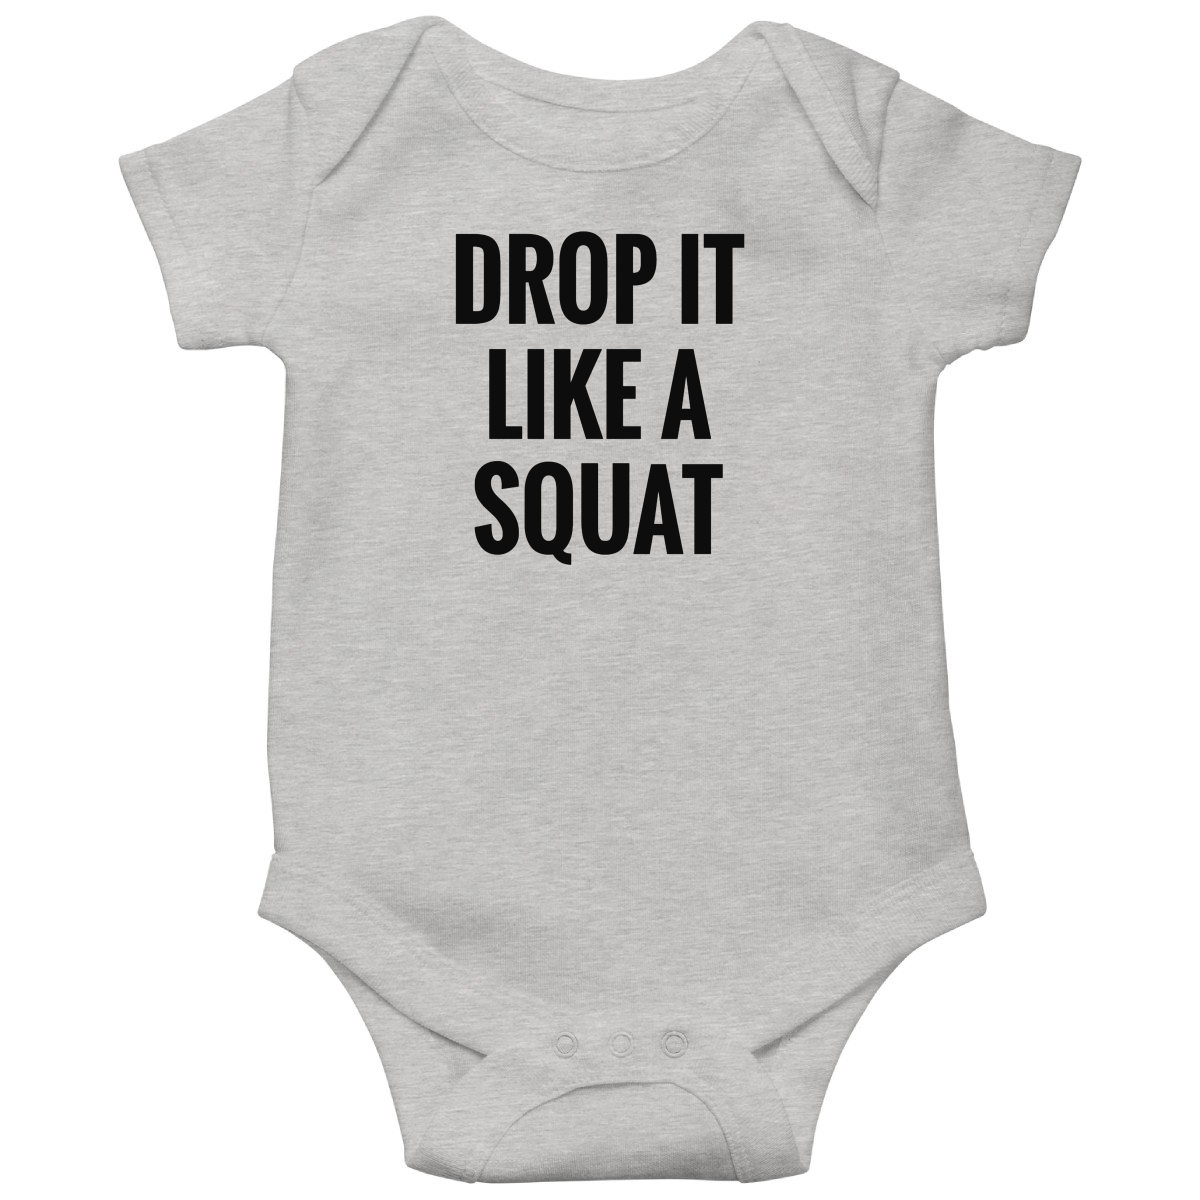 Drop It Like a Squat Baby Bodysuits | Gray